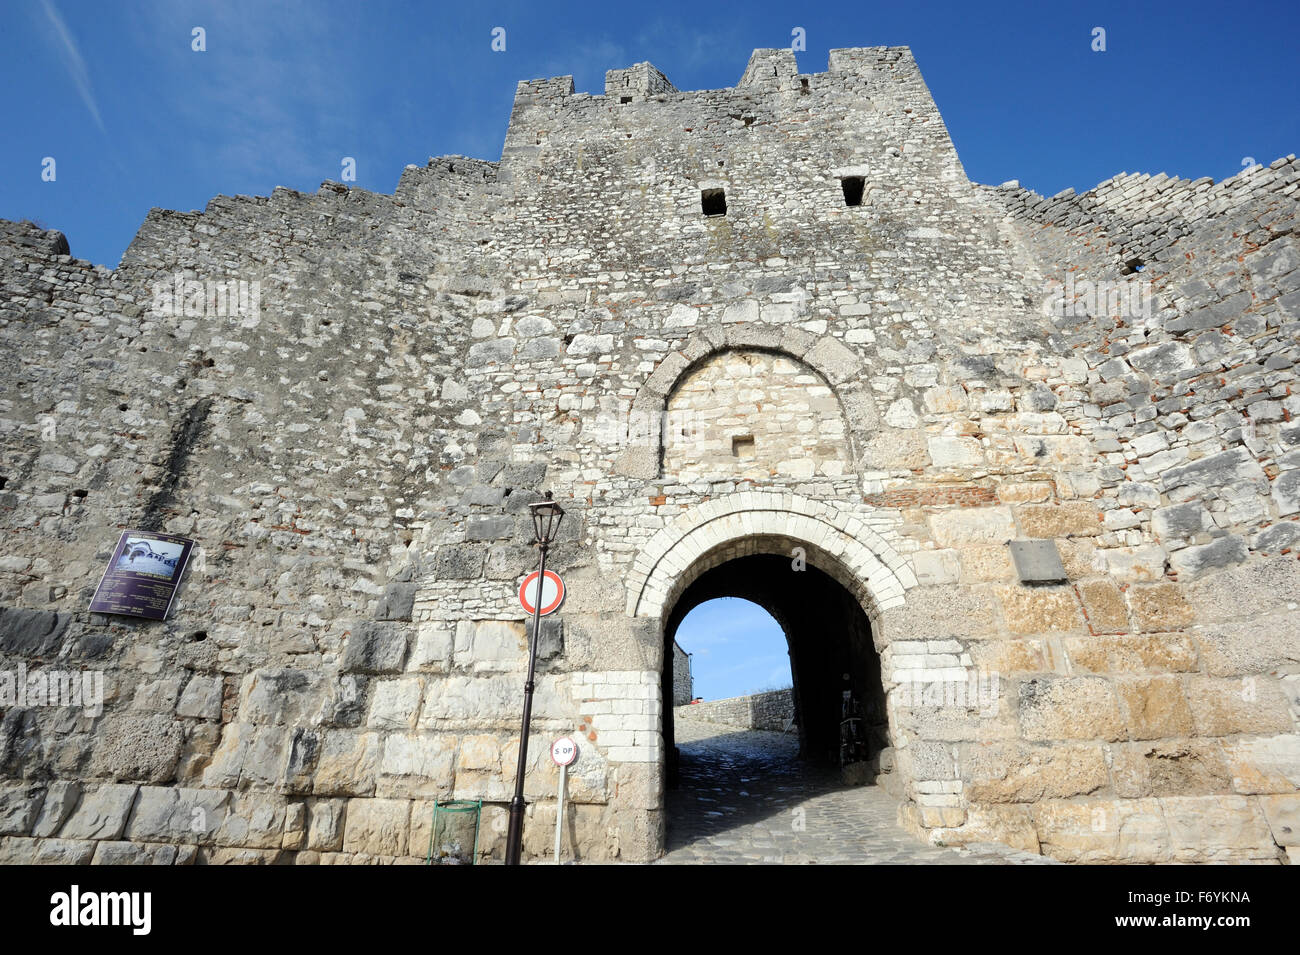 Arched gateway in the walls of the thirteenth century Berat Castle, Kalaja e Beratit.  Berat Castle is a world heritage site. Stock Photo